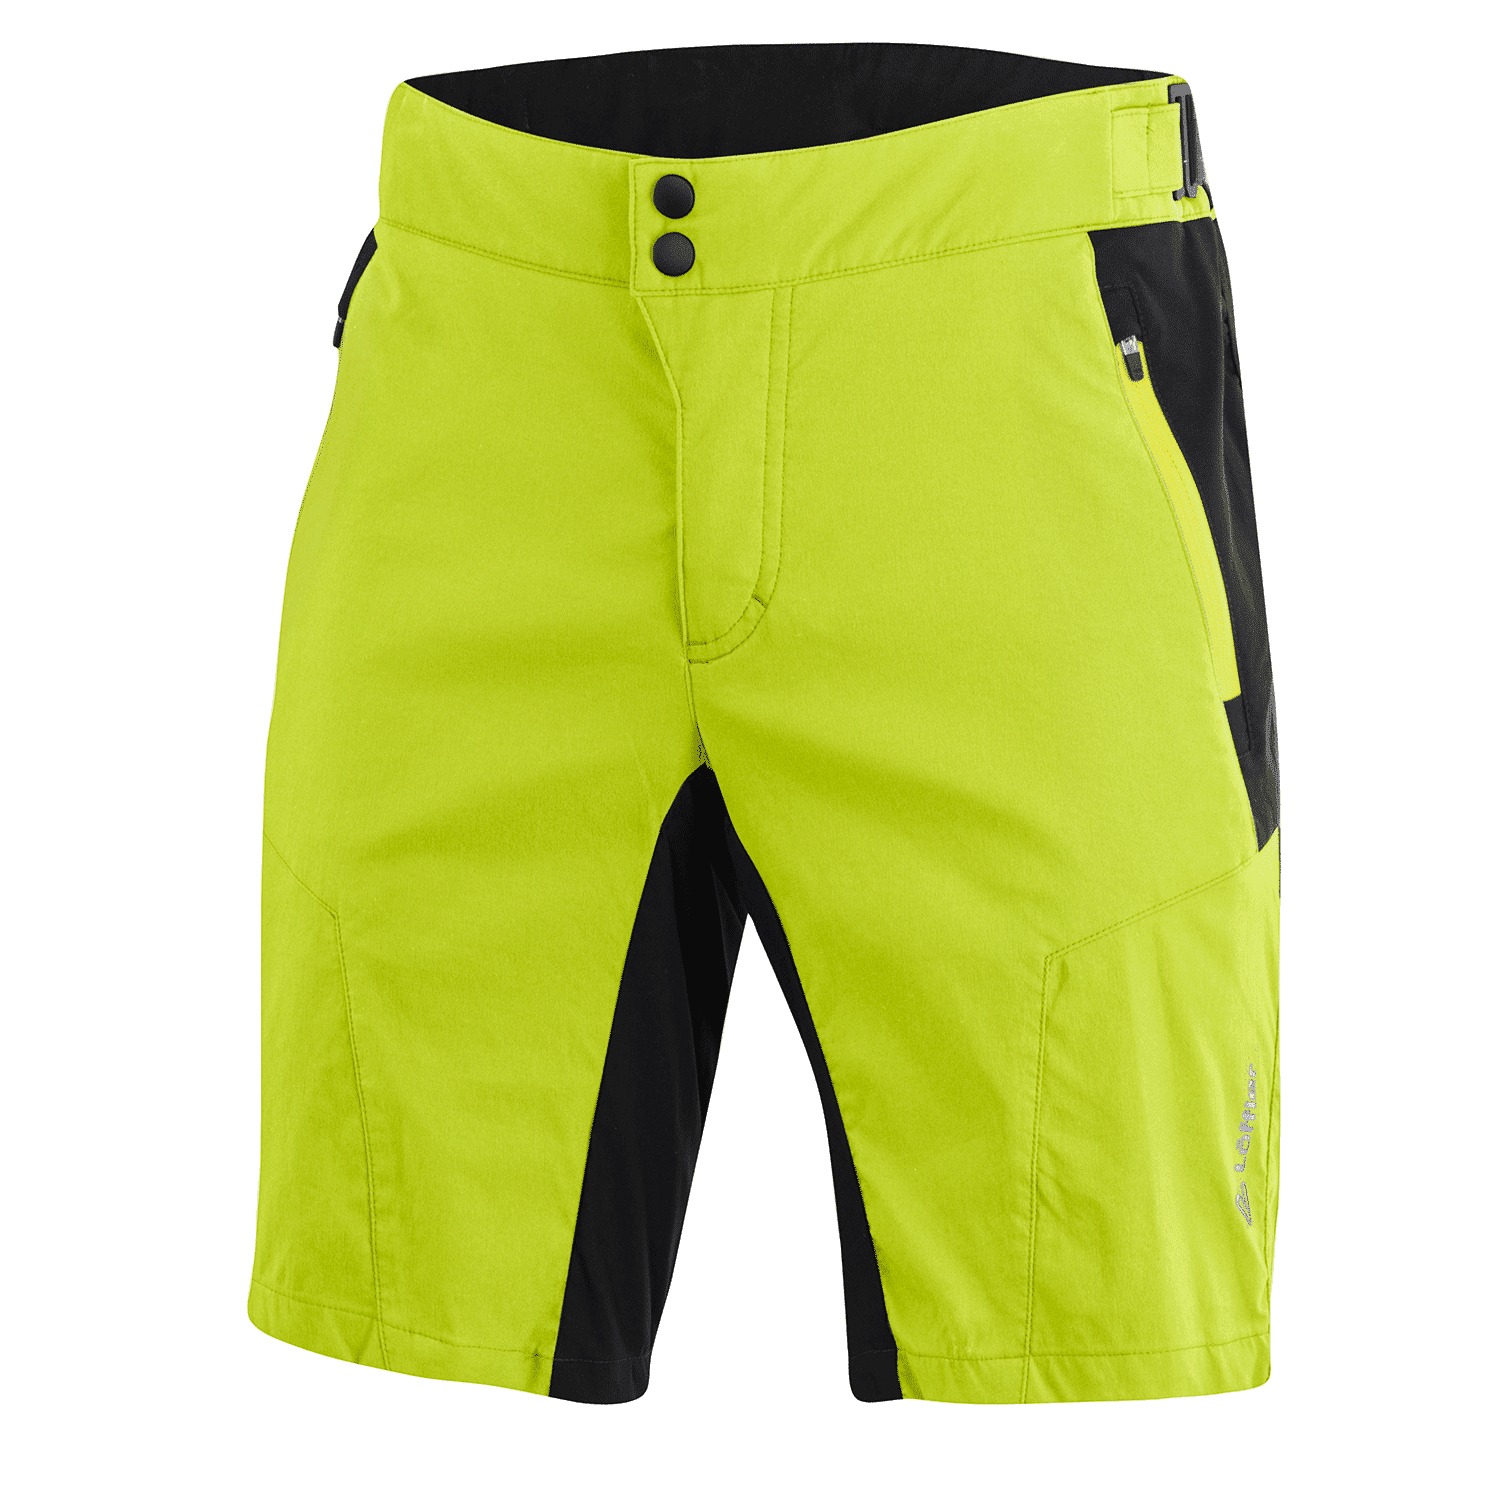 Löffler Bike Shorts Evo CSL - Pantalones cortos MTB - Hombre